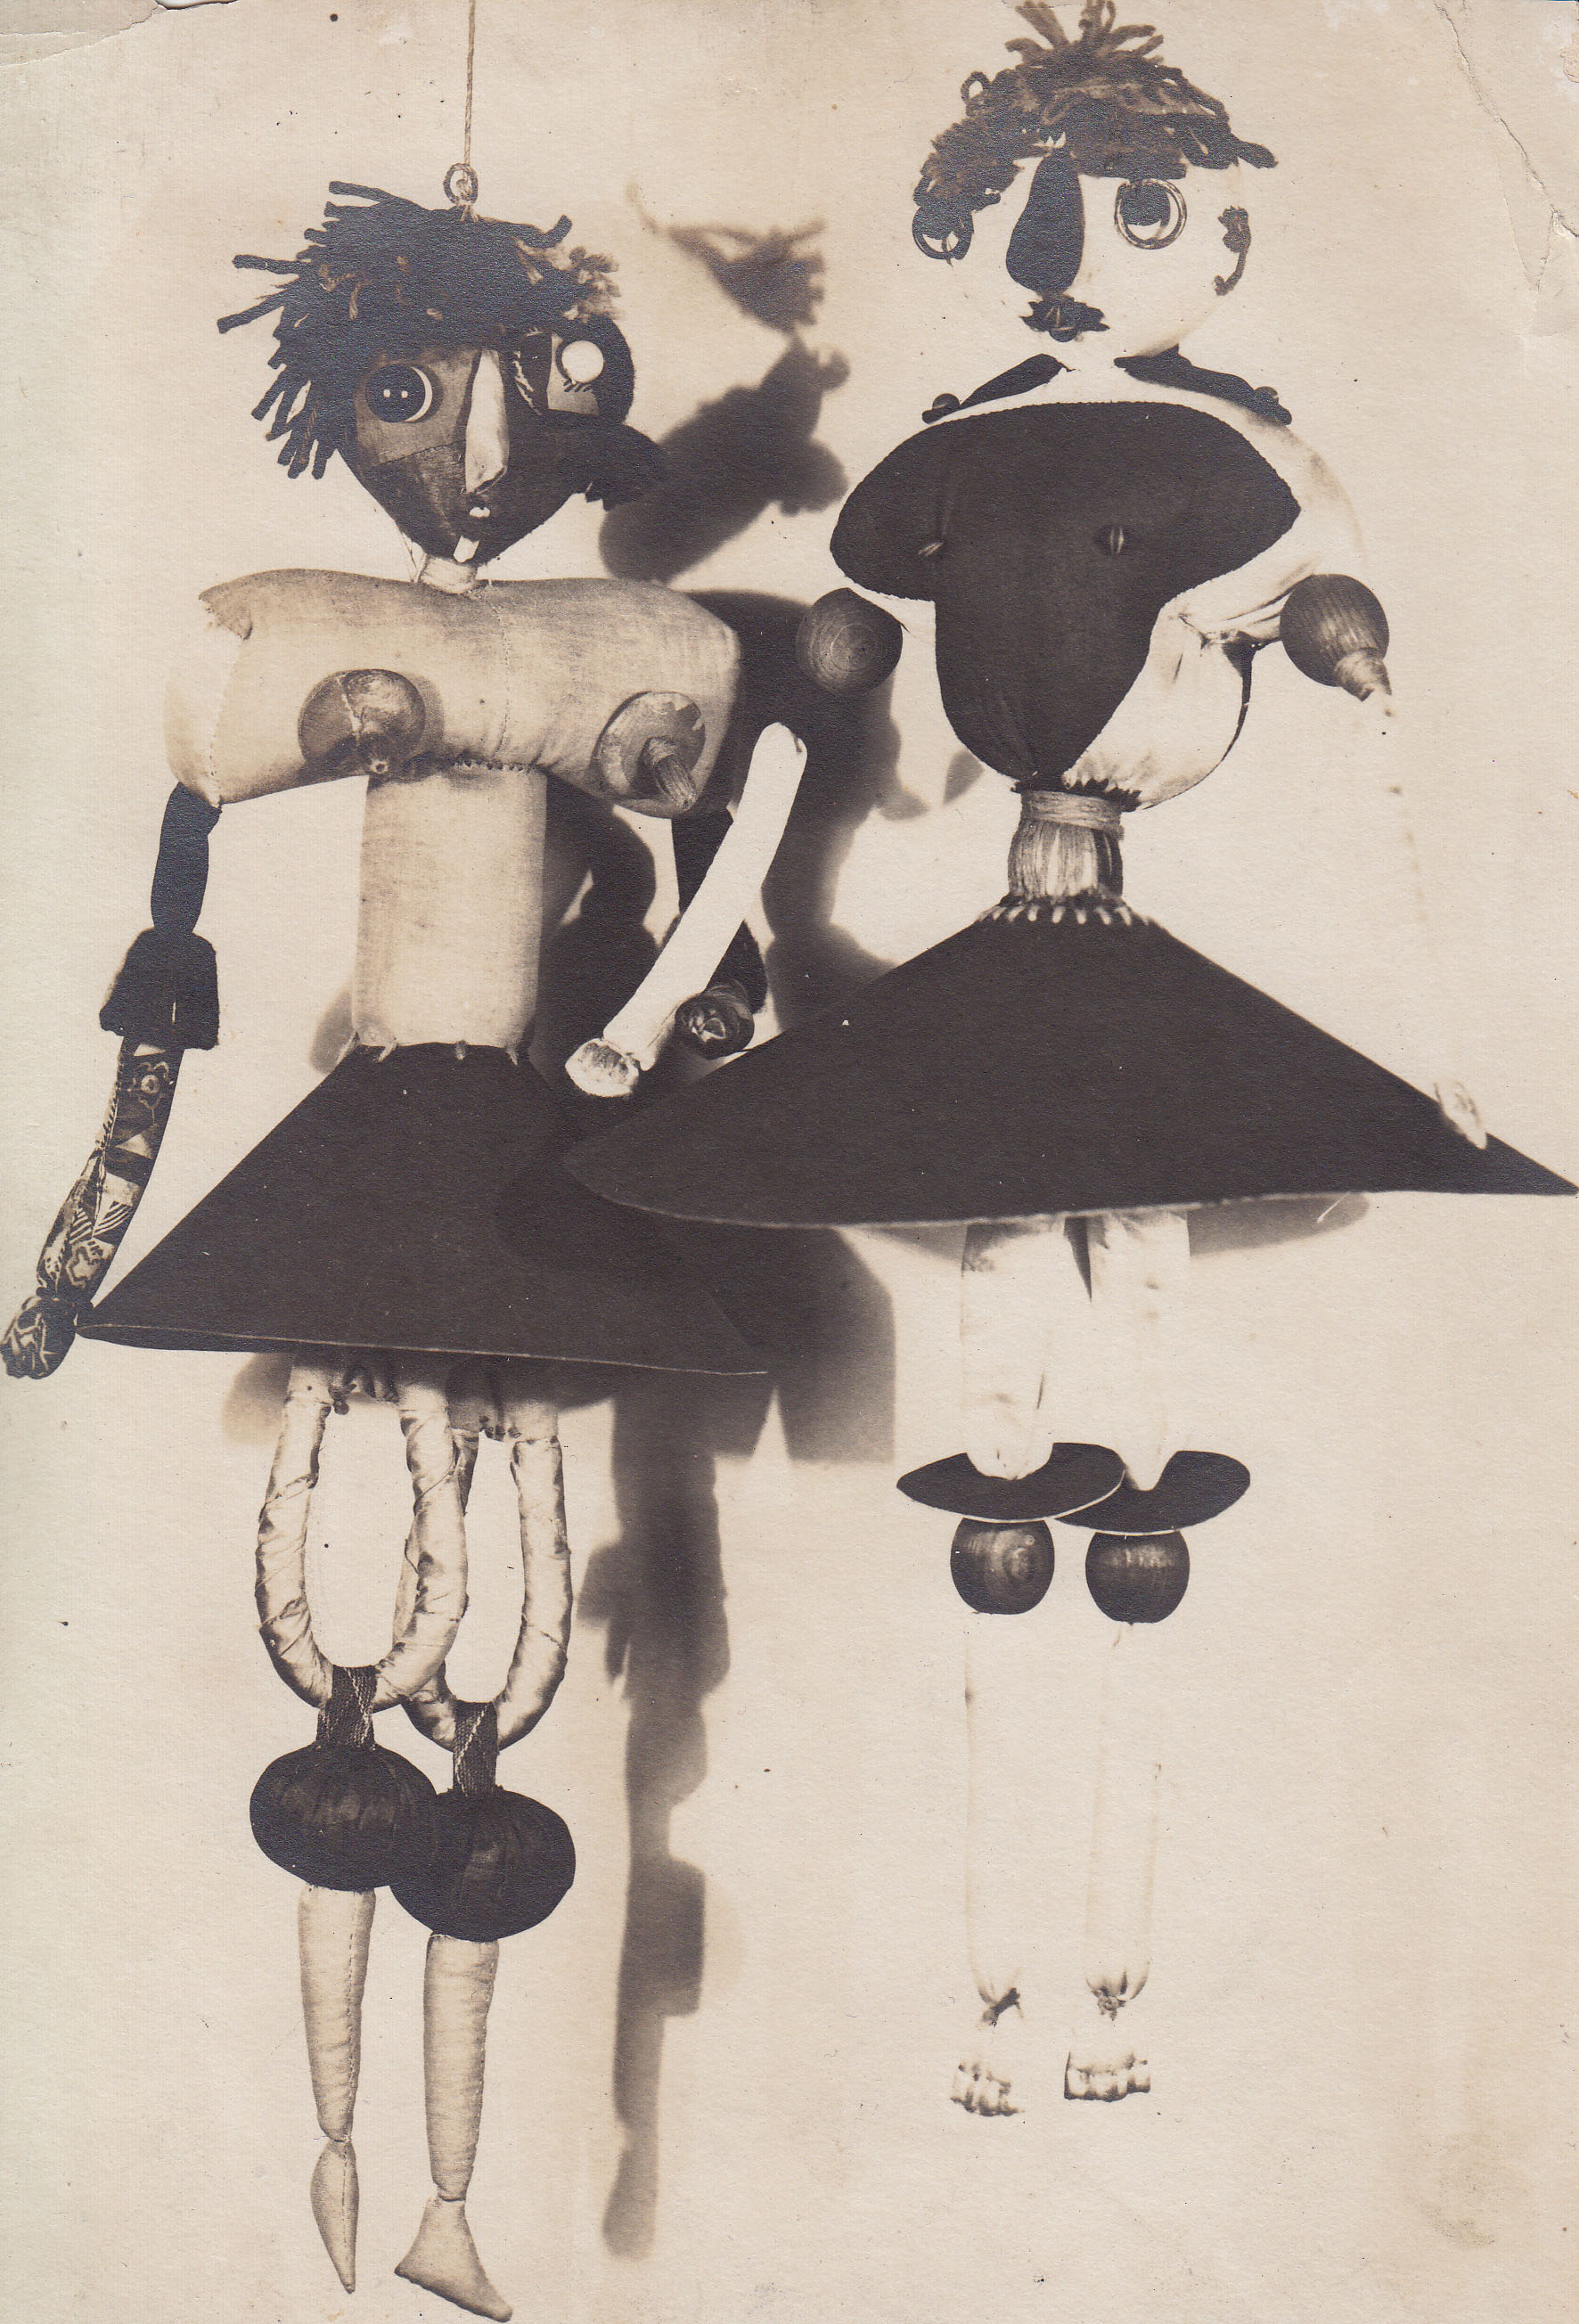 Unknown photographer. Photograph of Hannah Höch’s Dada Puppets, 1920. Gelatin silver print, 8 3/8 × 6? (21.3 × 15.3 cm). <em>Dadaglobe</em> submission from Hannah Höch. Mark Kelman, New York. Artwork © 2016 Hannah Höch/Artists Rights Society (ARS), New York/VG Bild-Kunst, Germany. Image courtesy of Museum of Modern Art.